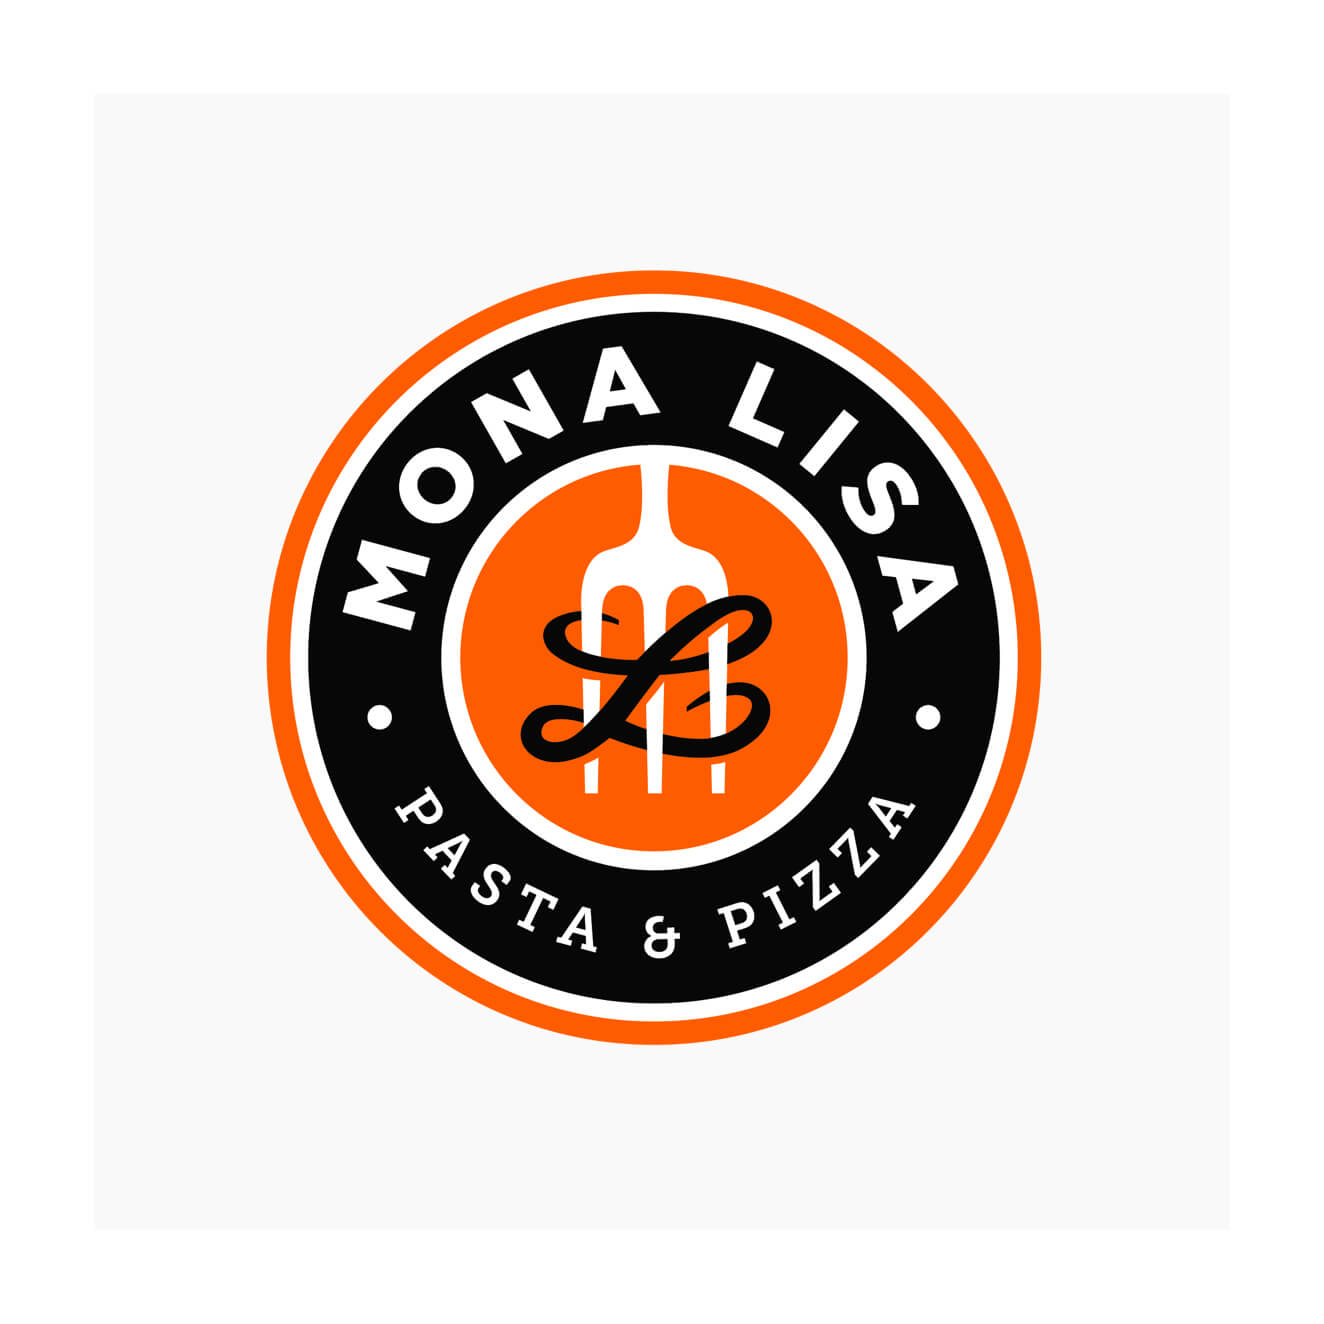 Mona Lisa Pasta logo